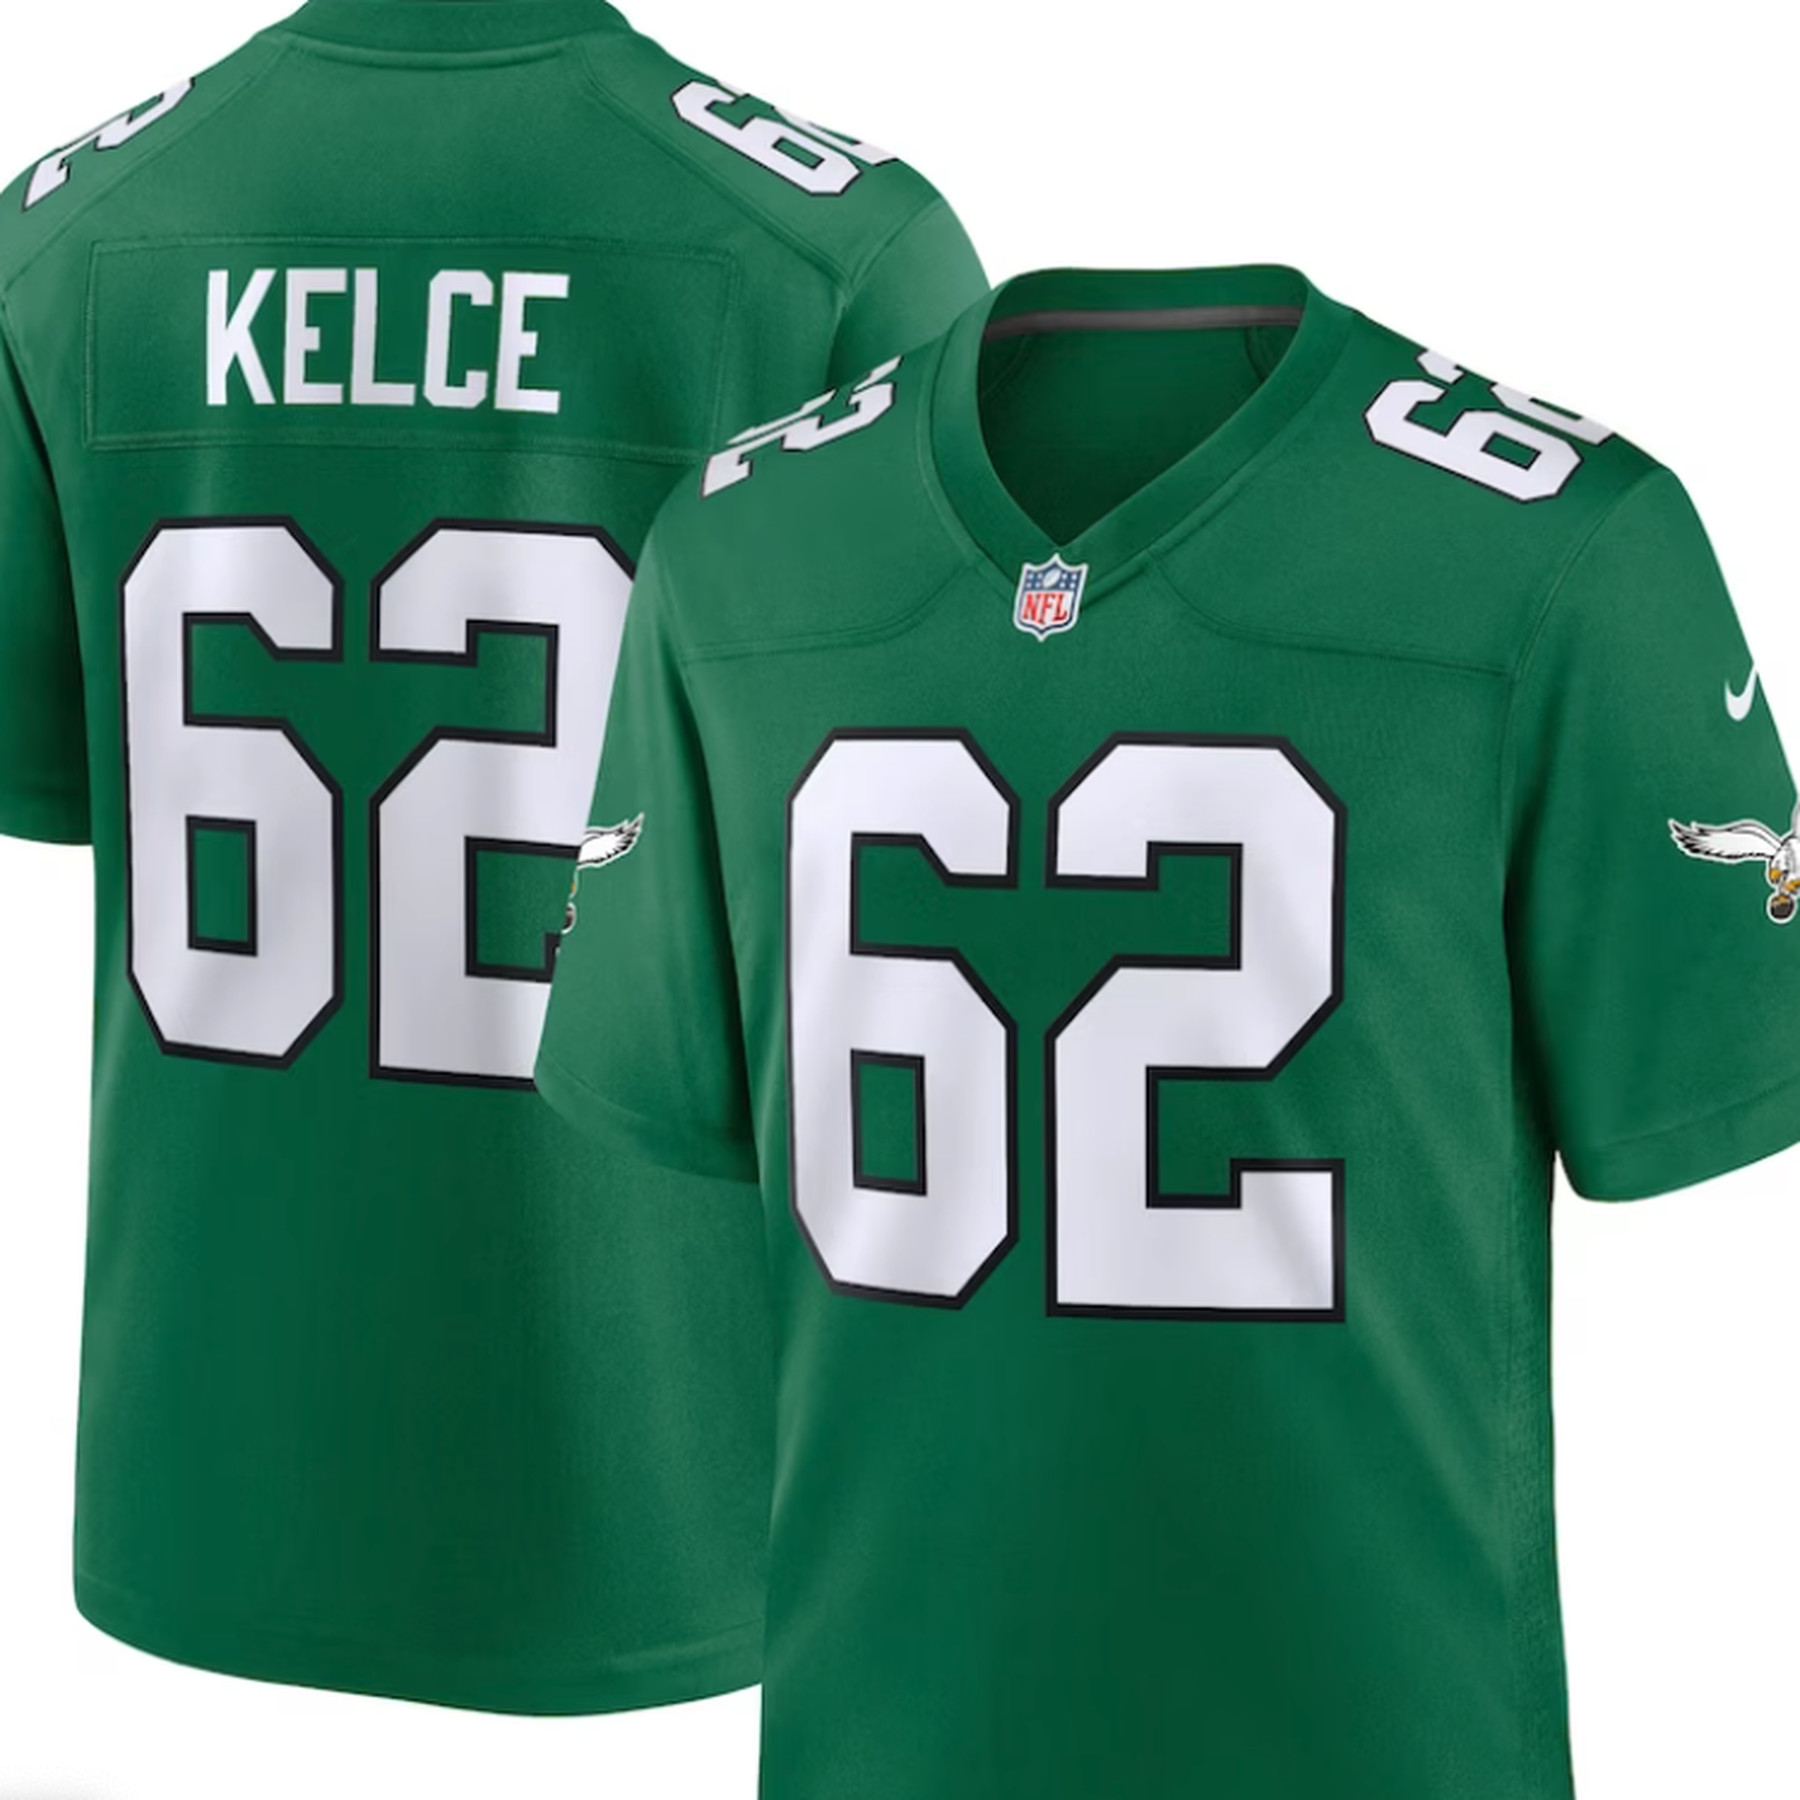 Eagles kelly green throwback alternate jerseys for sale - Bleeding Green  Nation